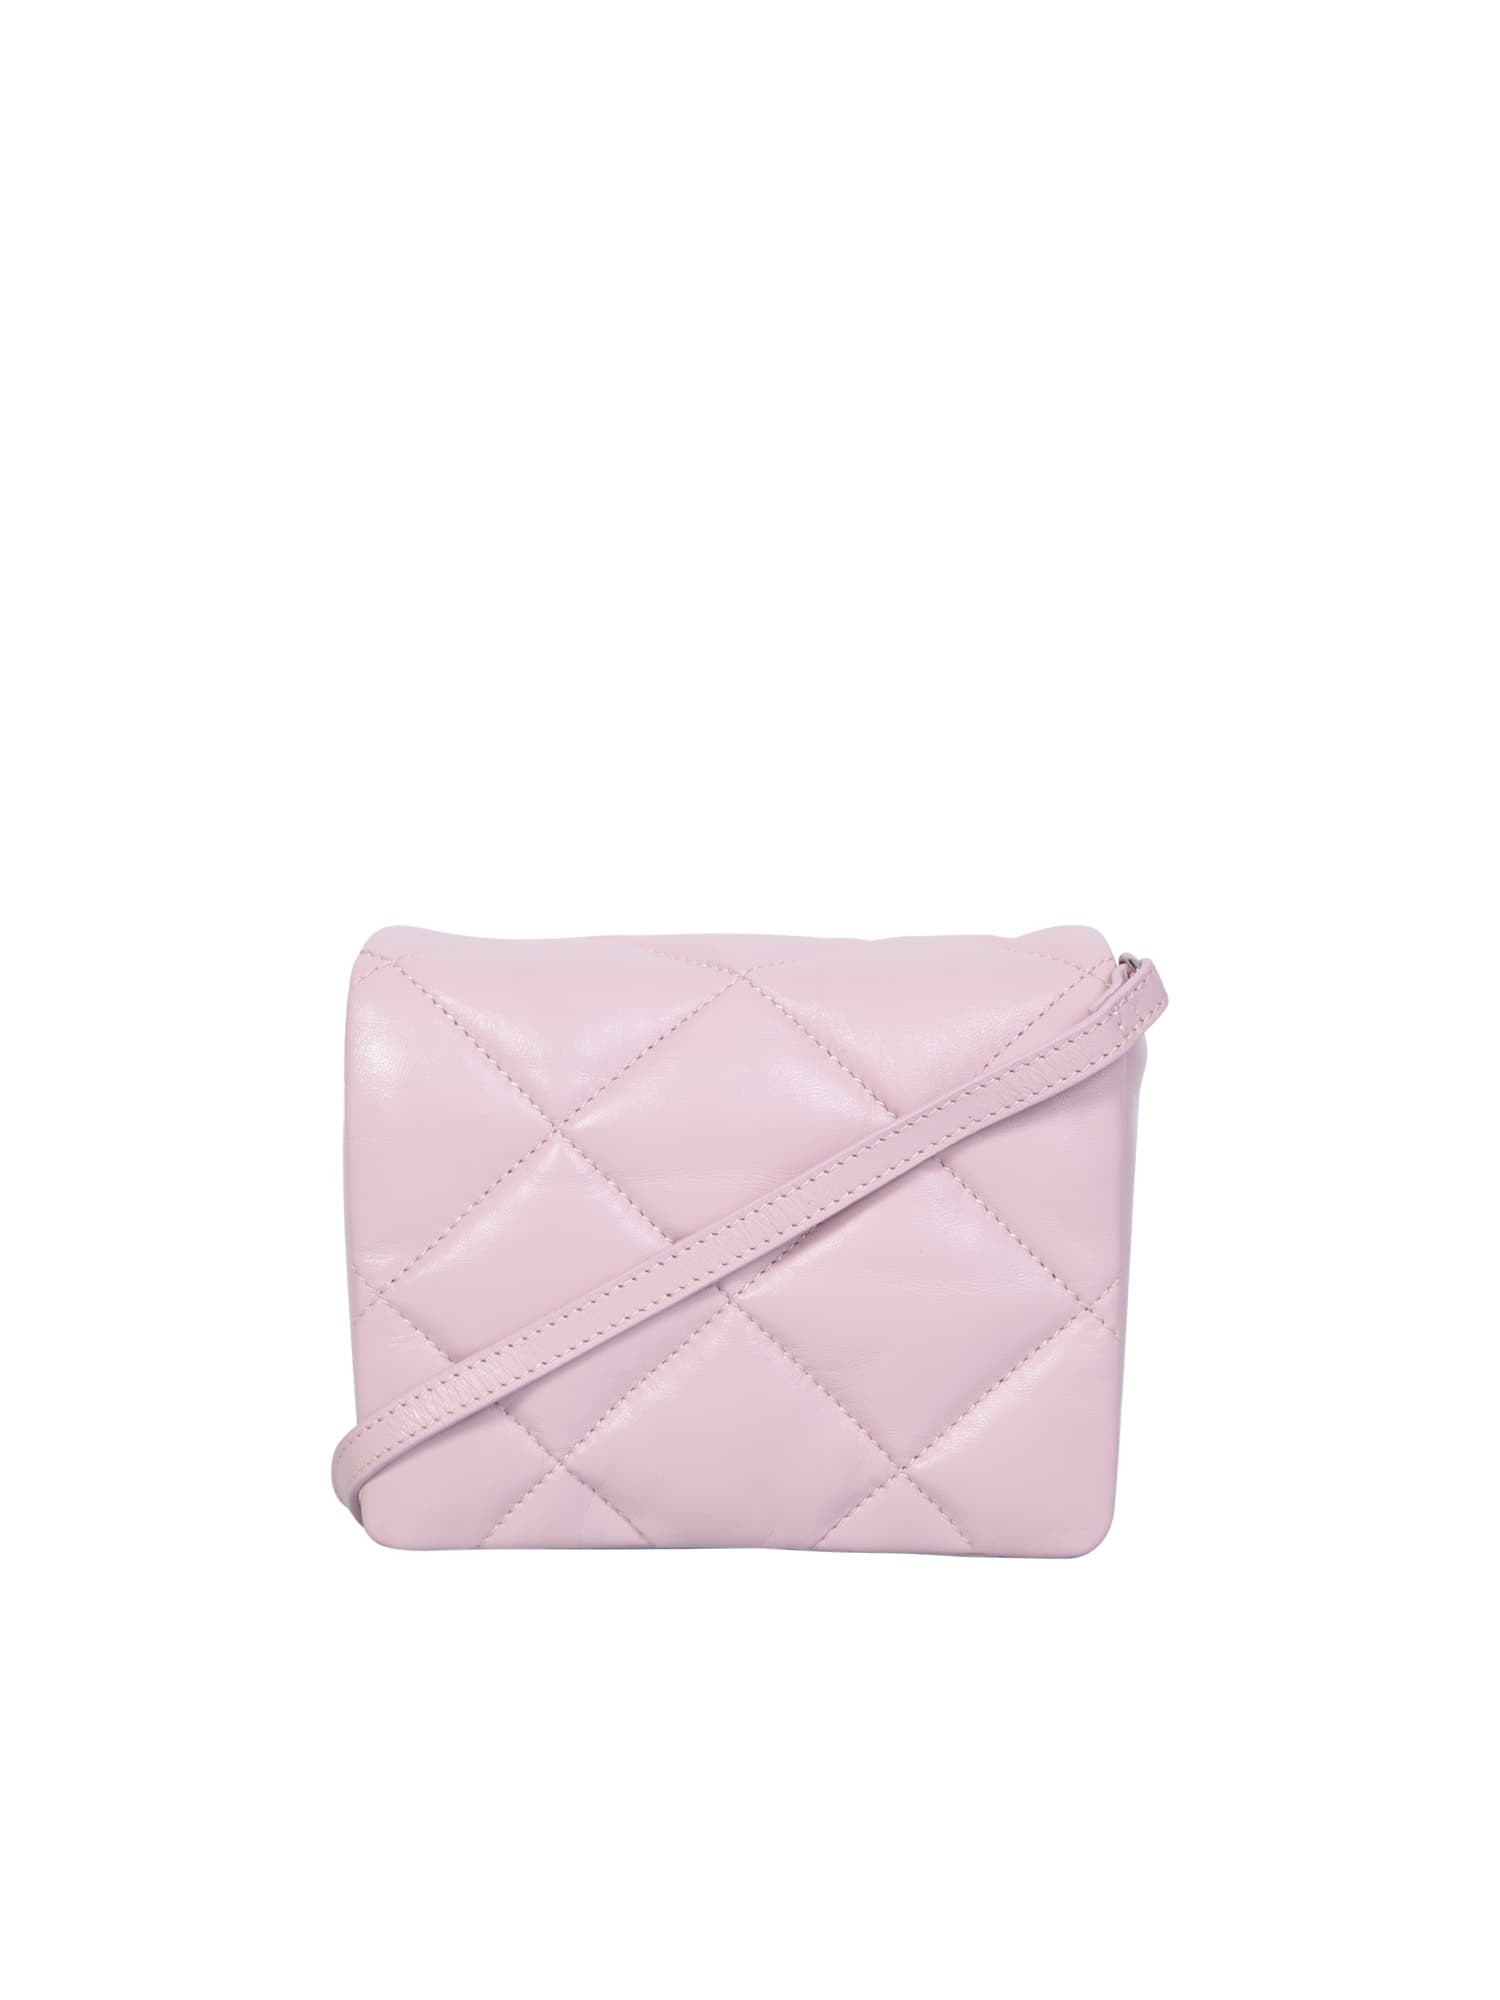 Shop Stand Studio Hestia Small Pink Bag